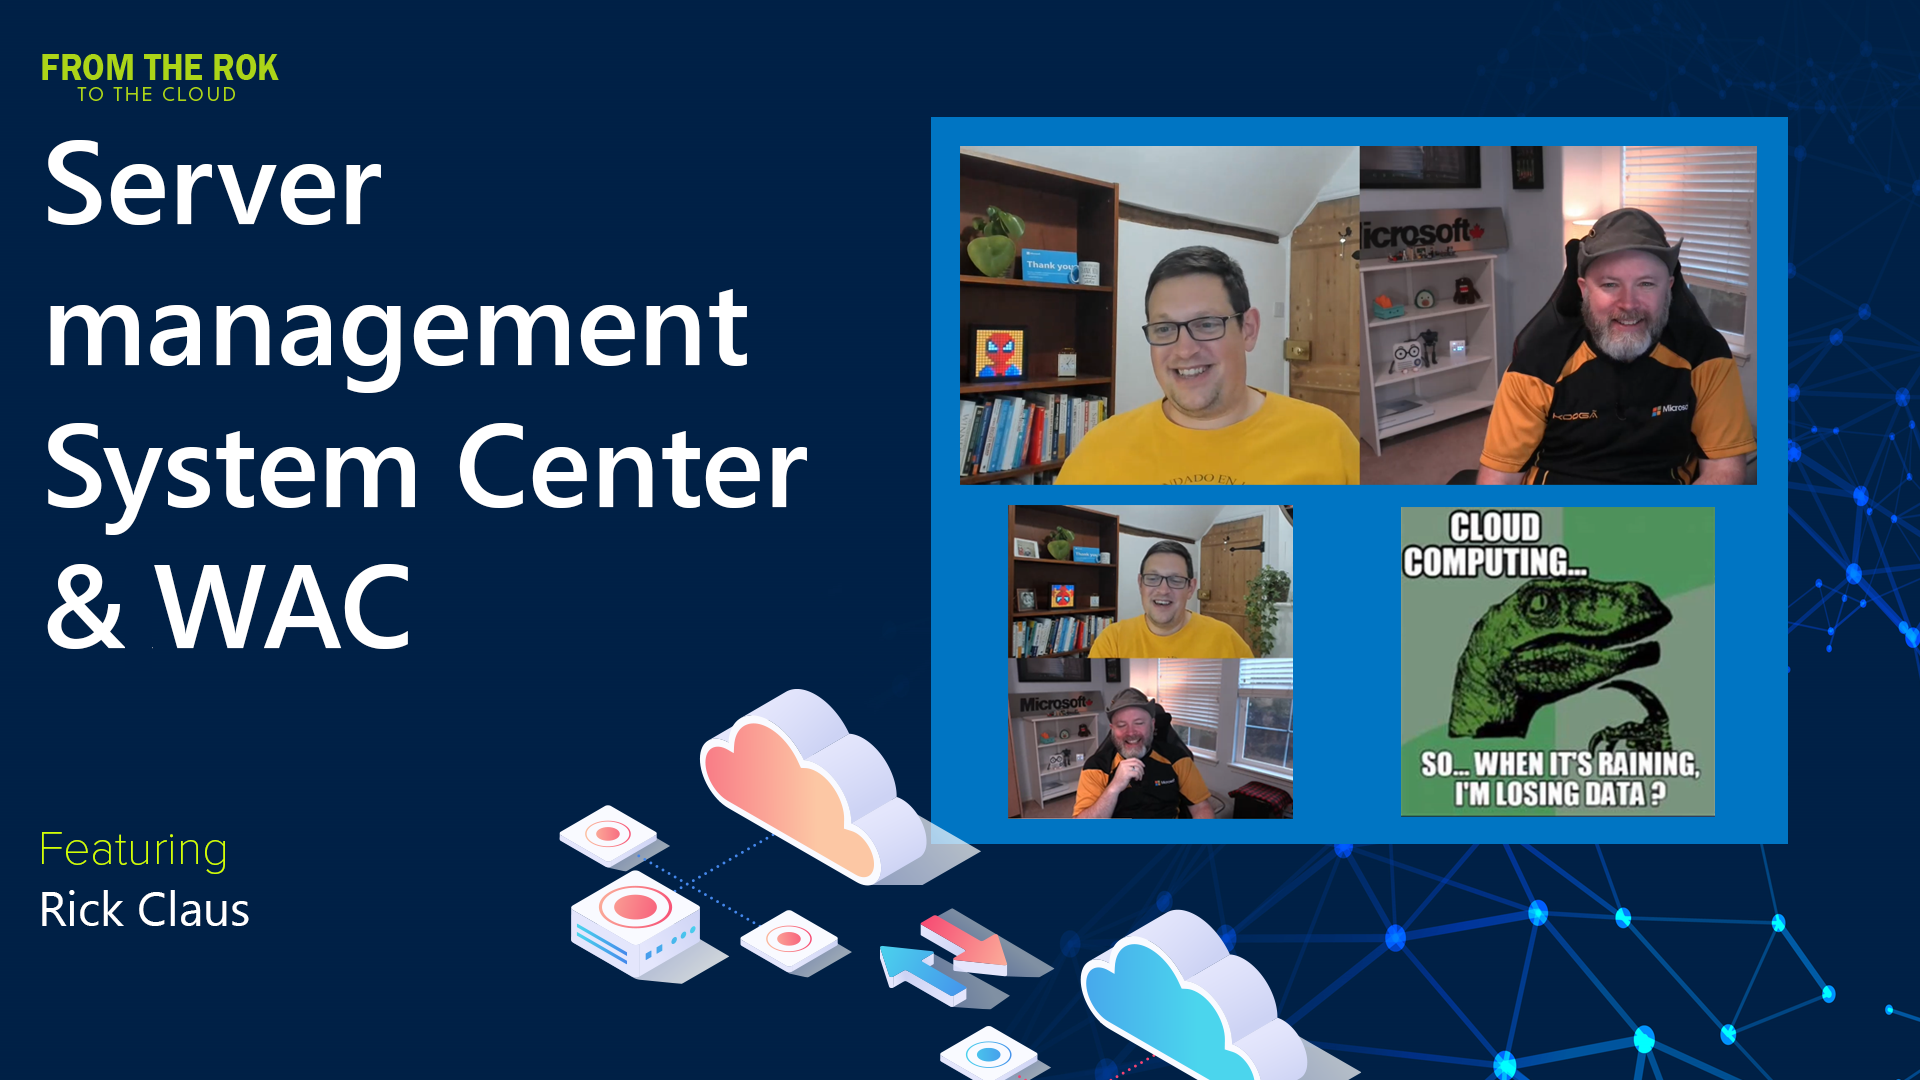 Modernize server management with System Center and Windows Admin Center